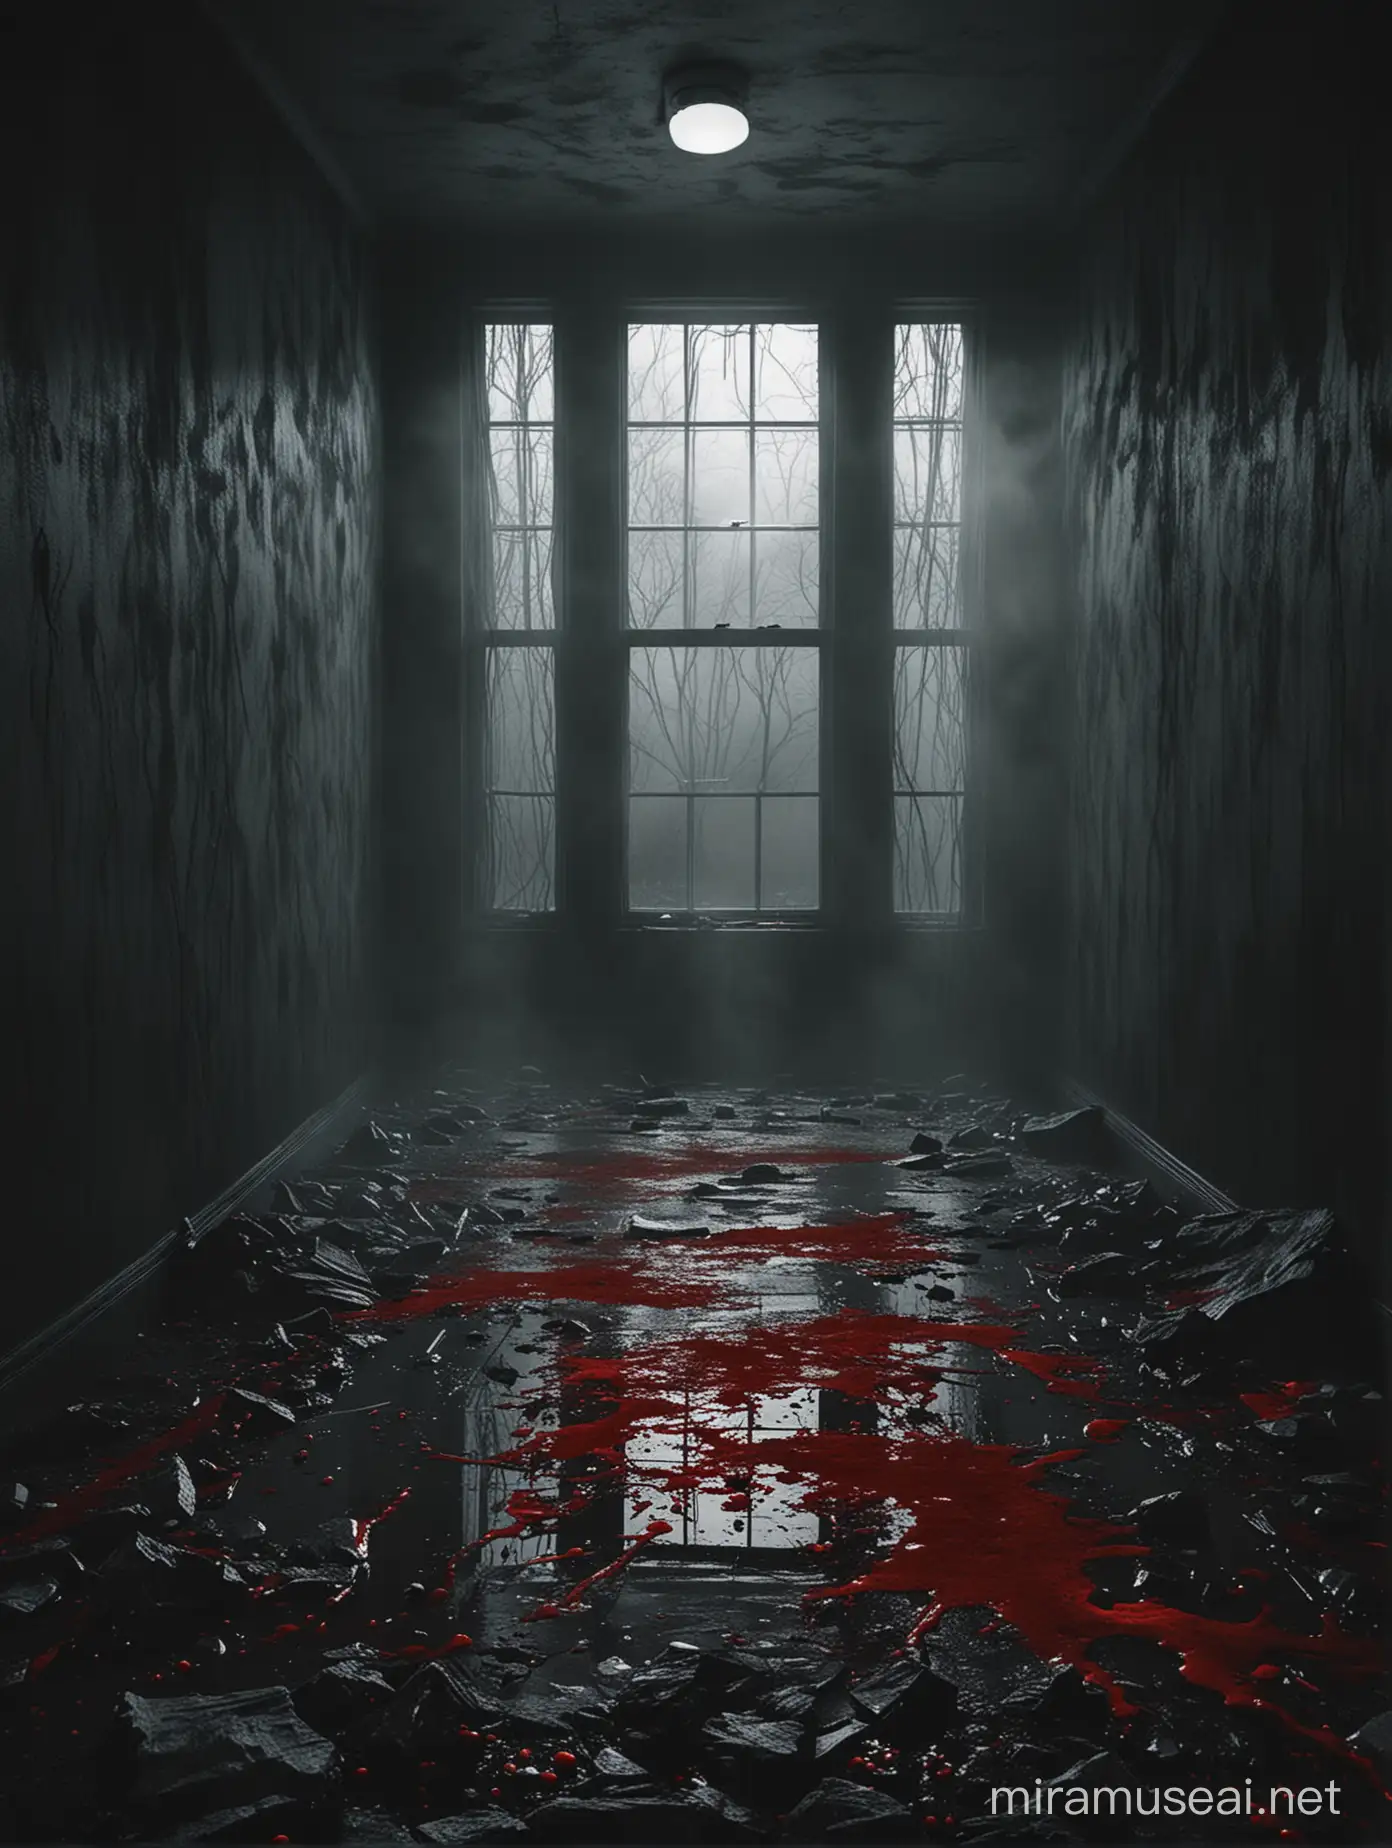 Terrifying Scenes Misty Vortex Window Knocks and Blood Flow